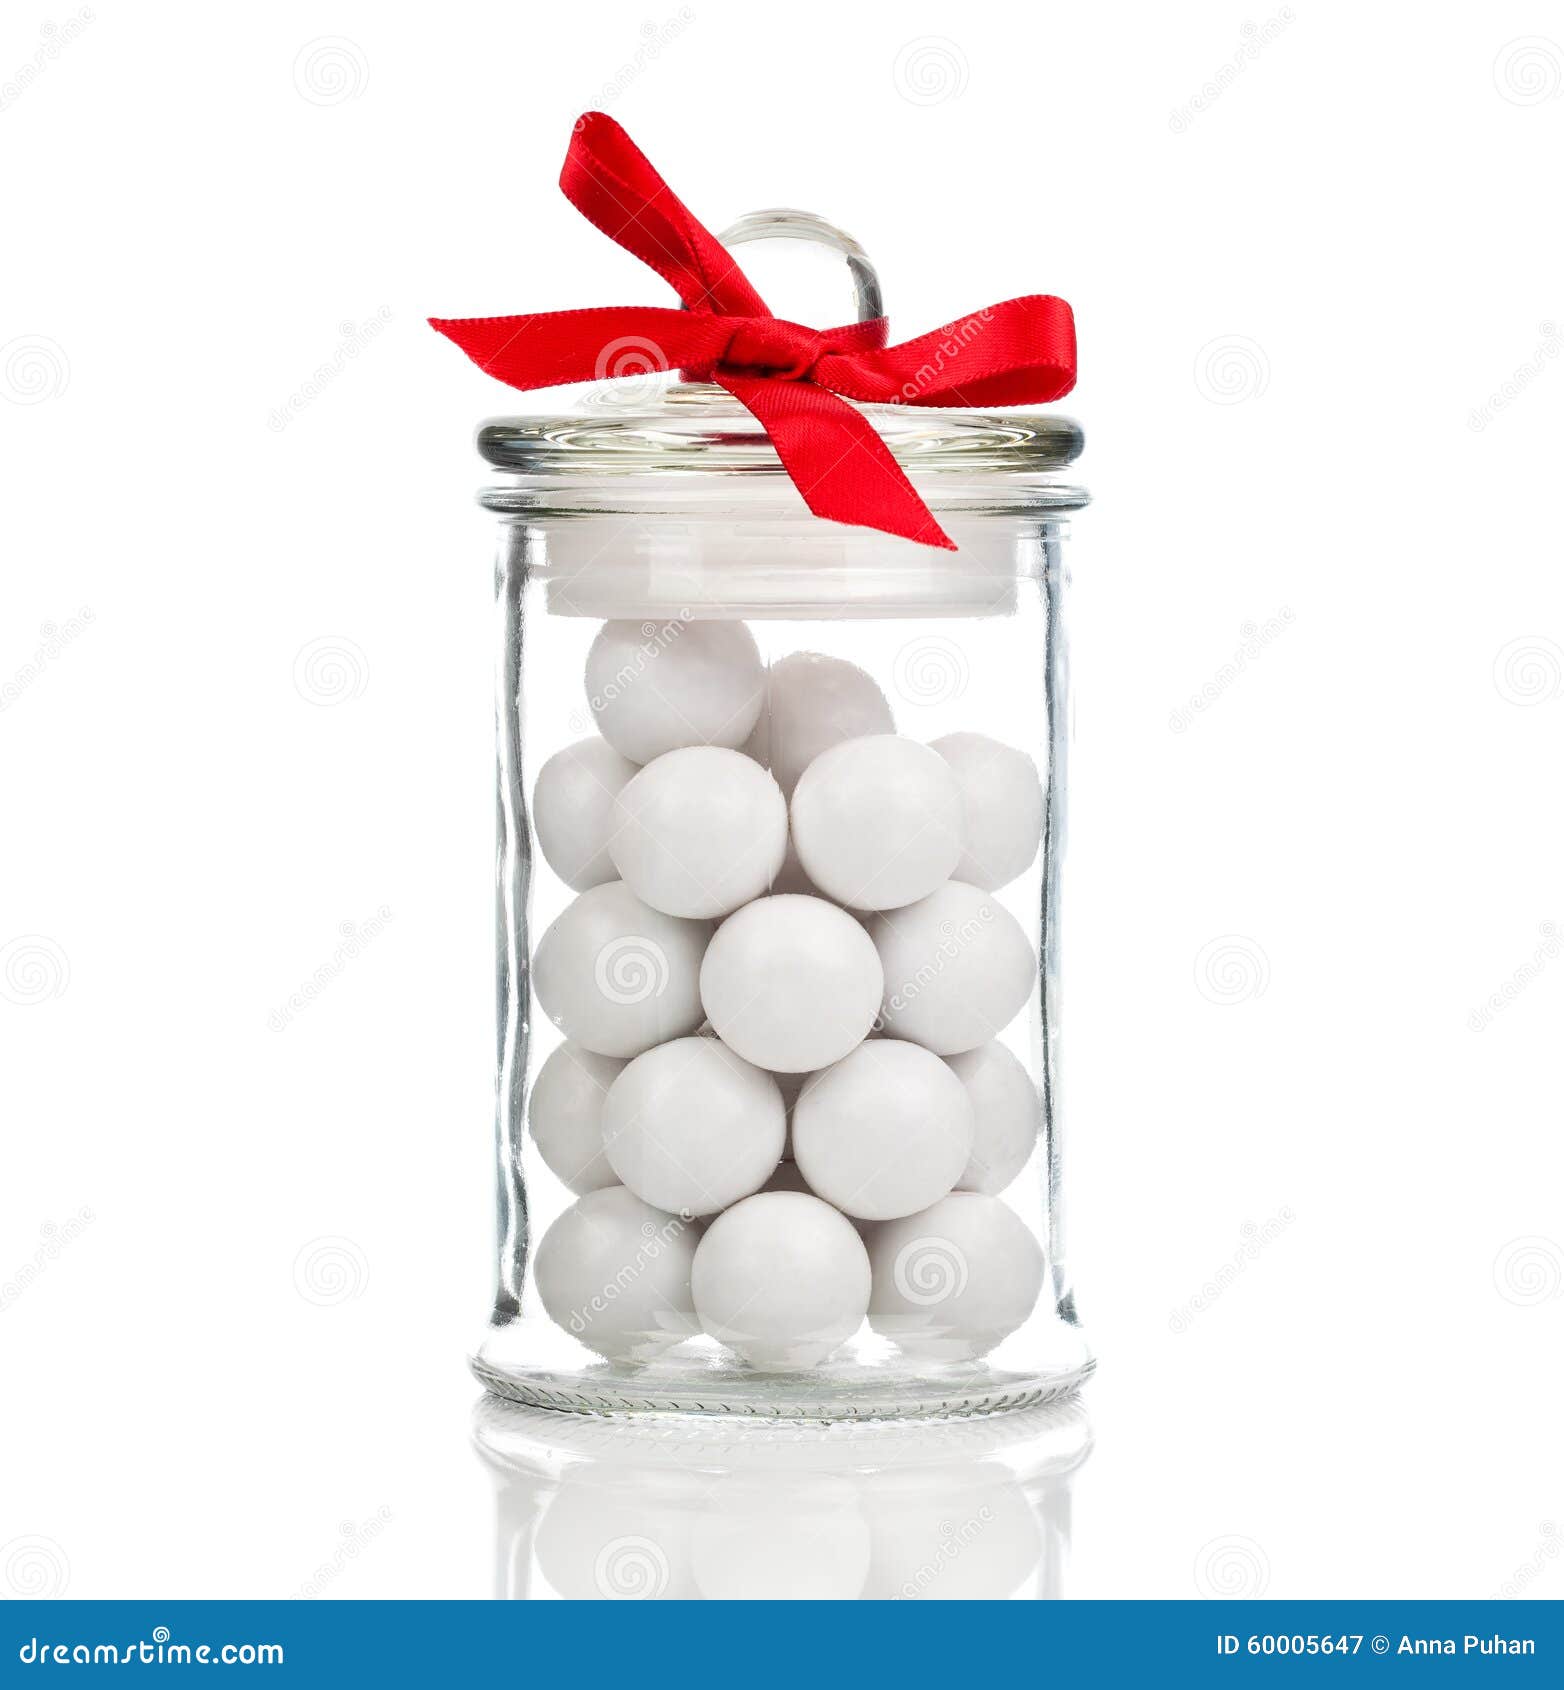 white candies, gumballs in glass jar